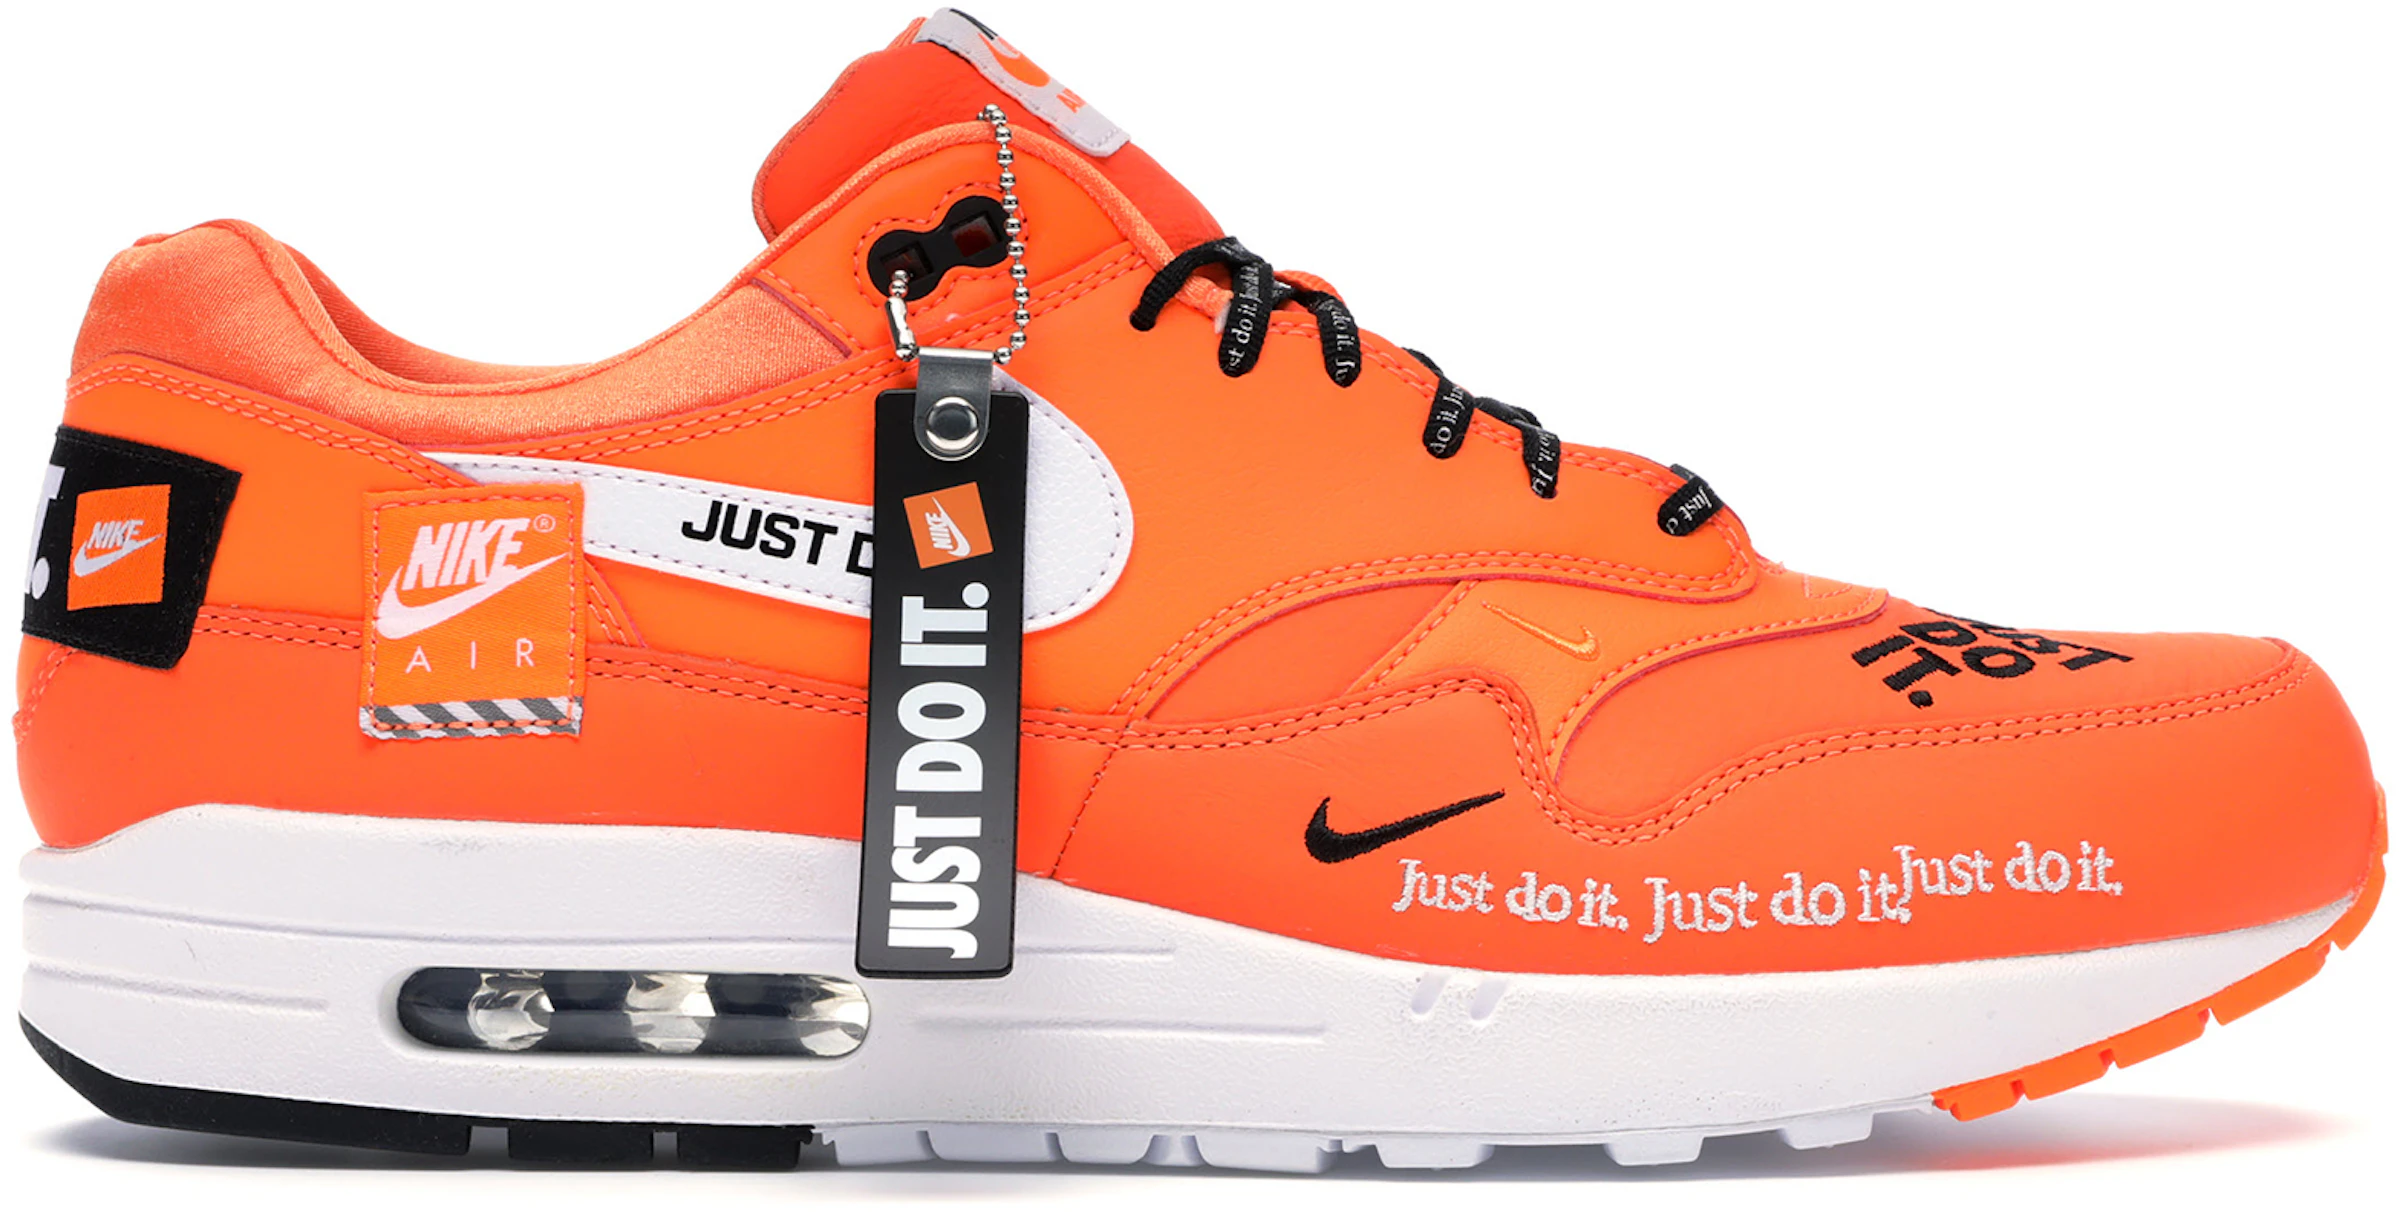 Nike Air Max 1 Just Do It Orange - AO1021-800 - US